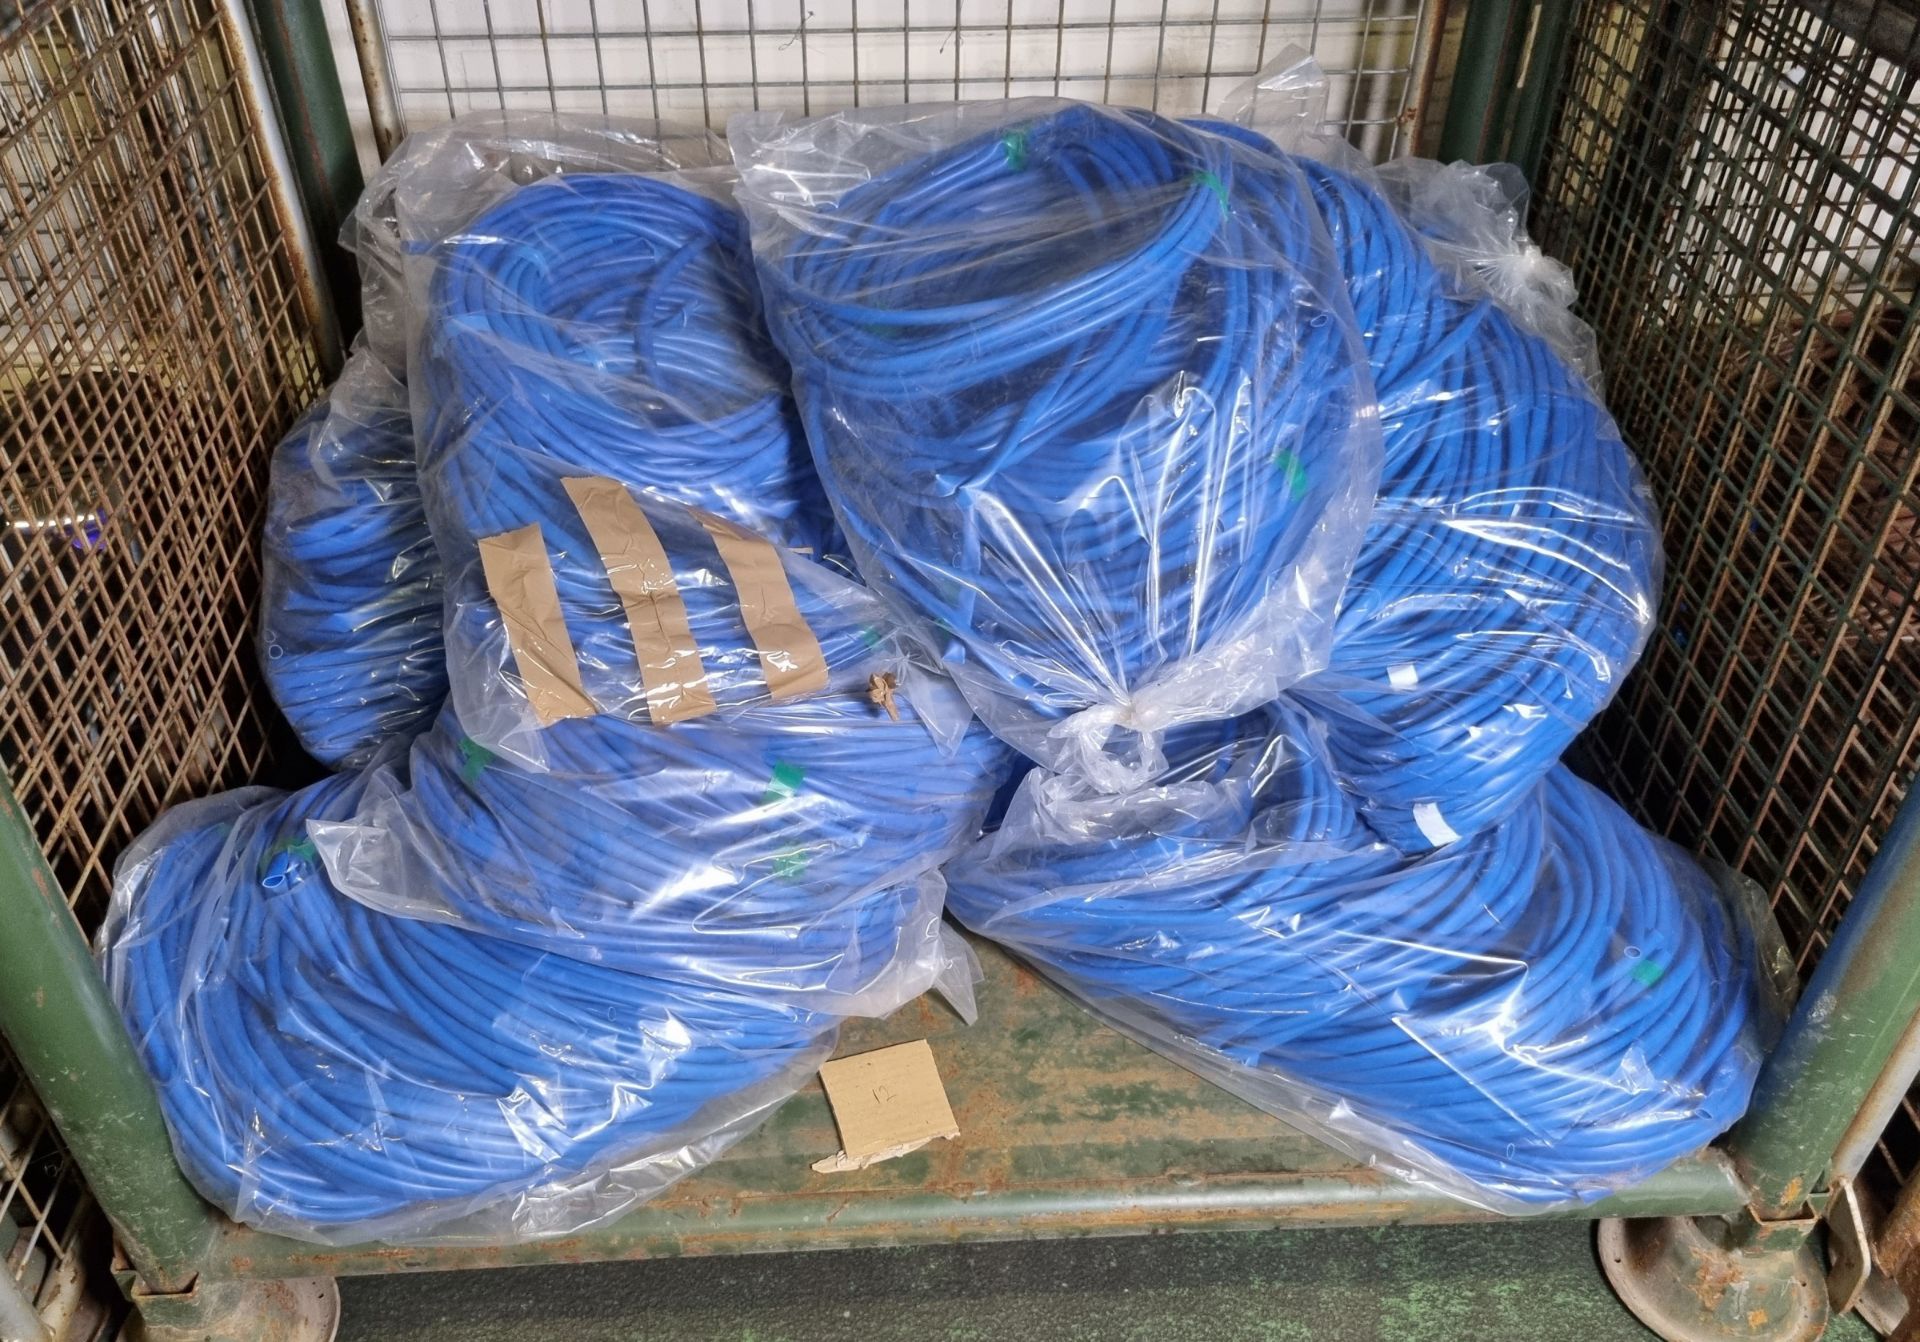 12x packs of blue 12mm x 10m PVC insulator sheath sleeves - 12 sleeves per pack - Image 2 of 3